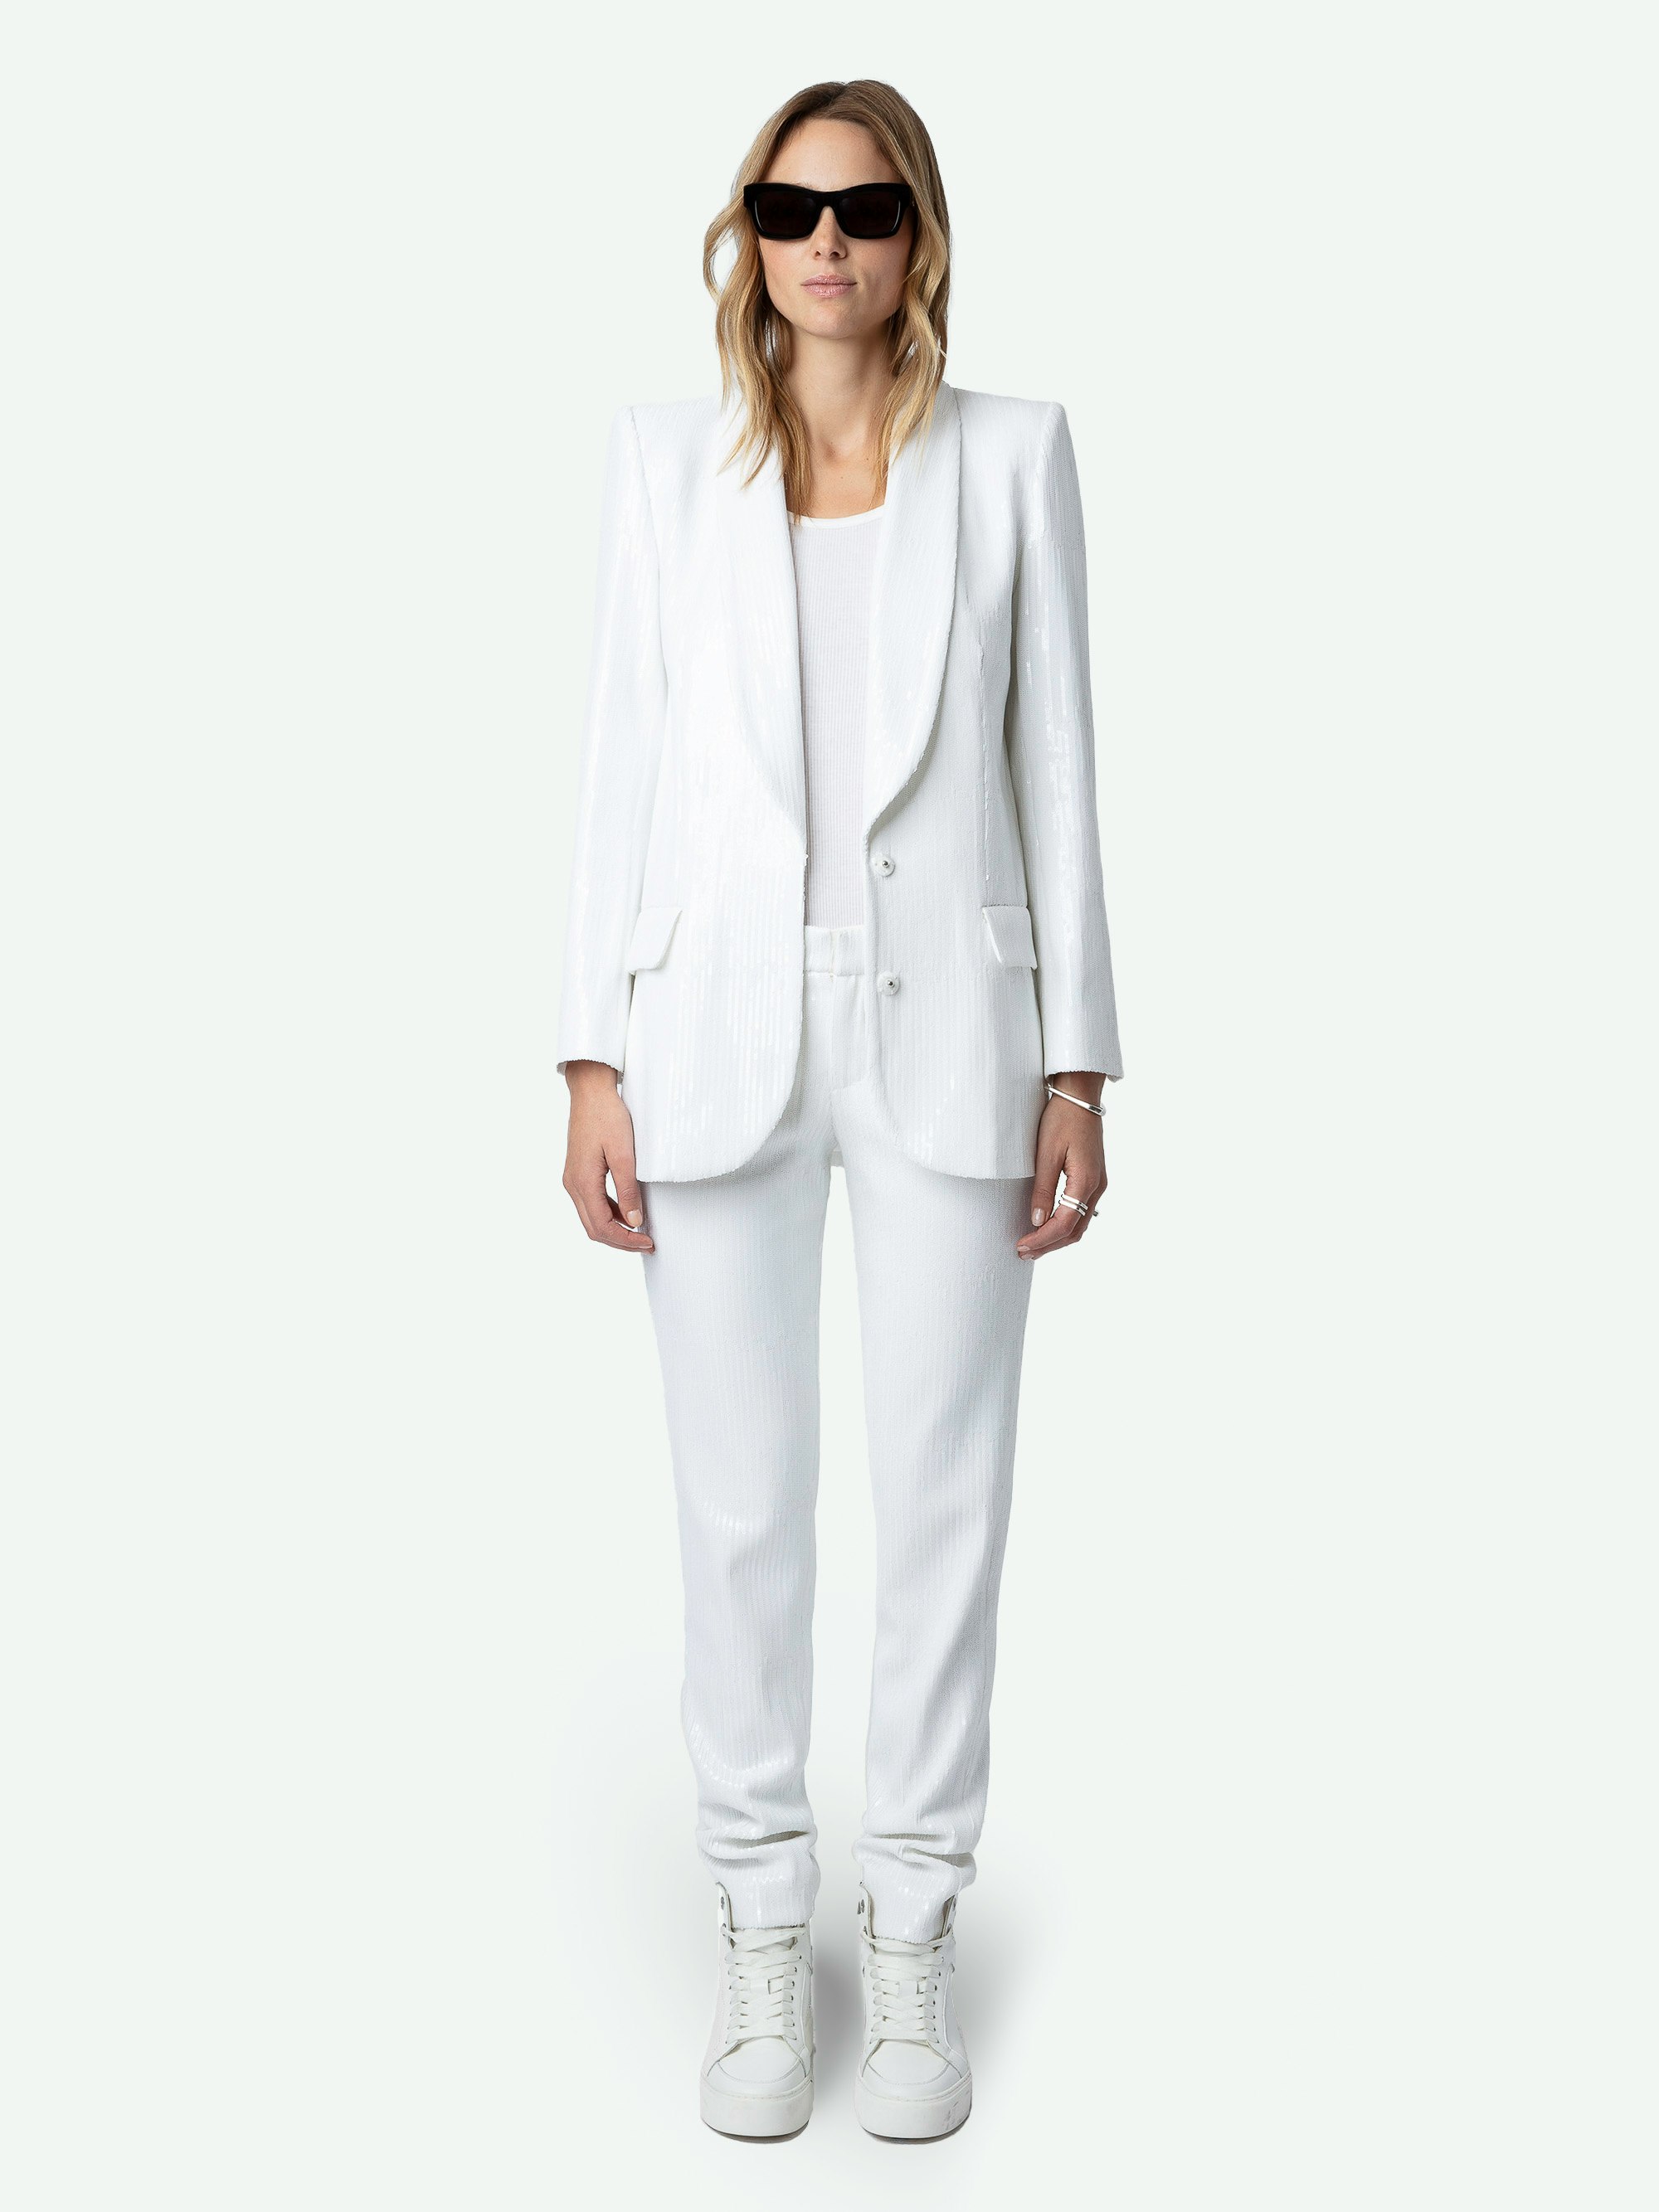 Vive Sequin Blazer - Ecru button-up blazer with sequins and pockets.